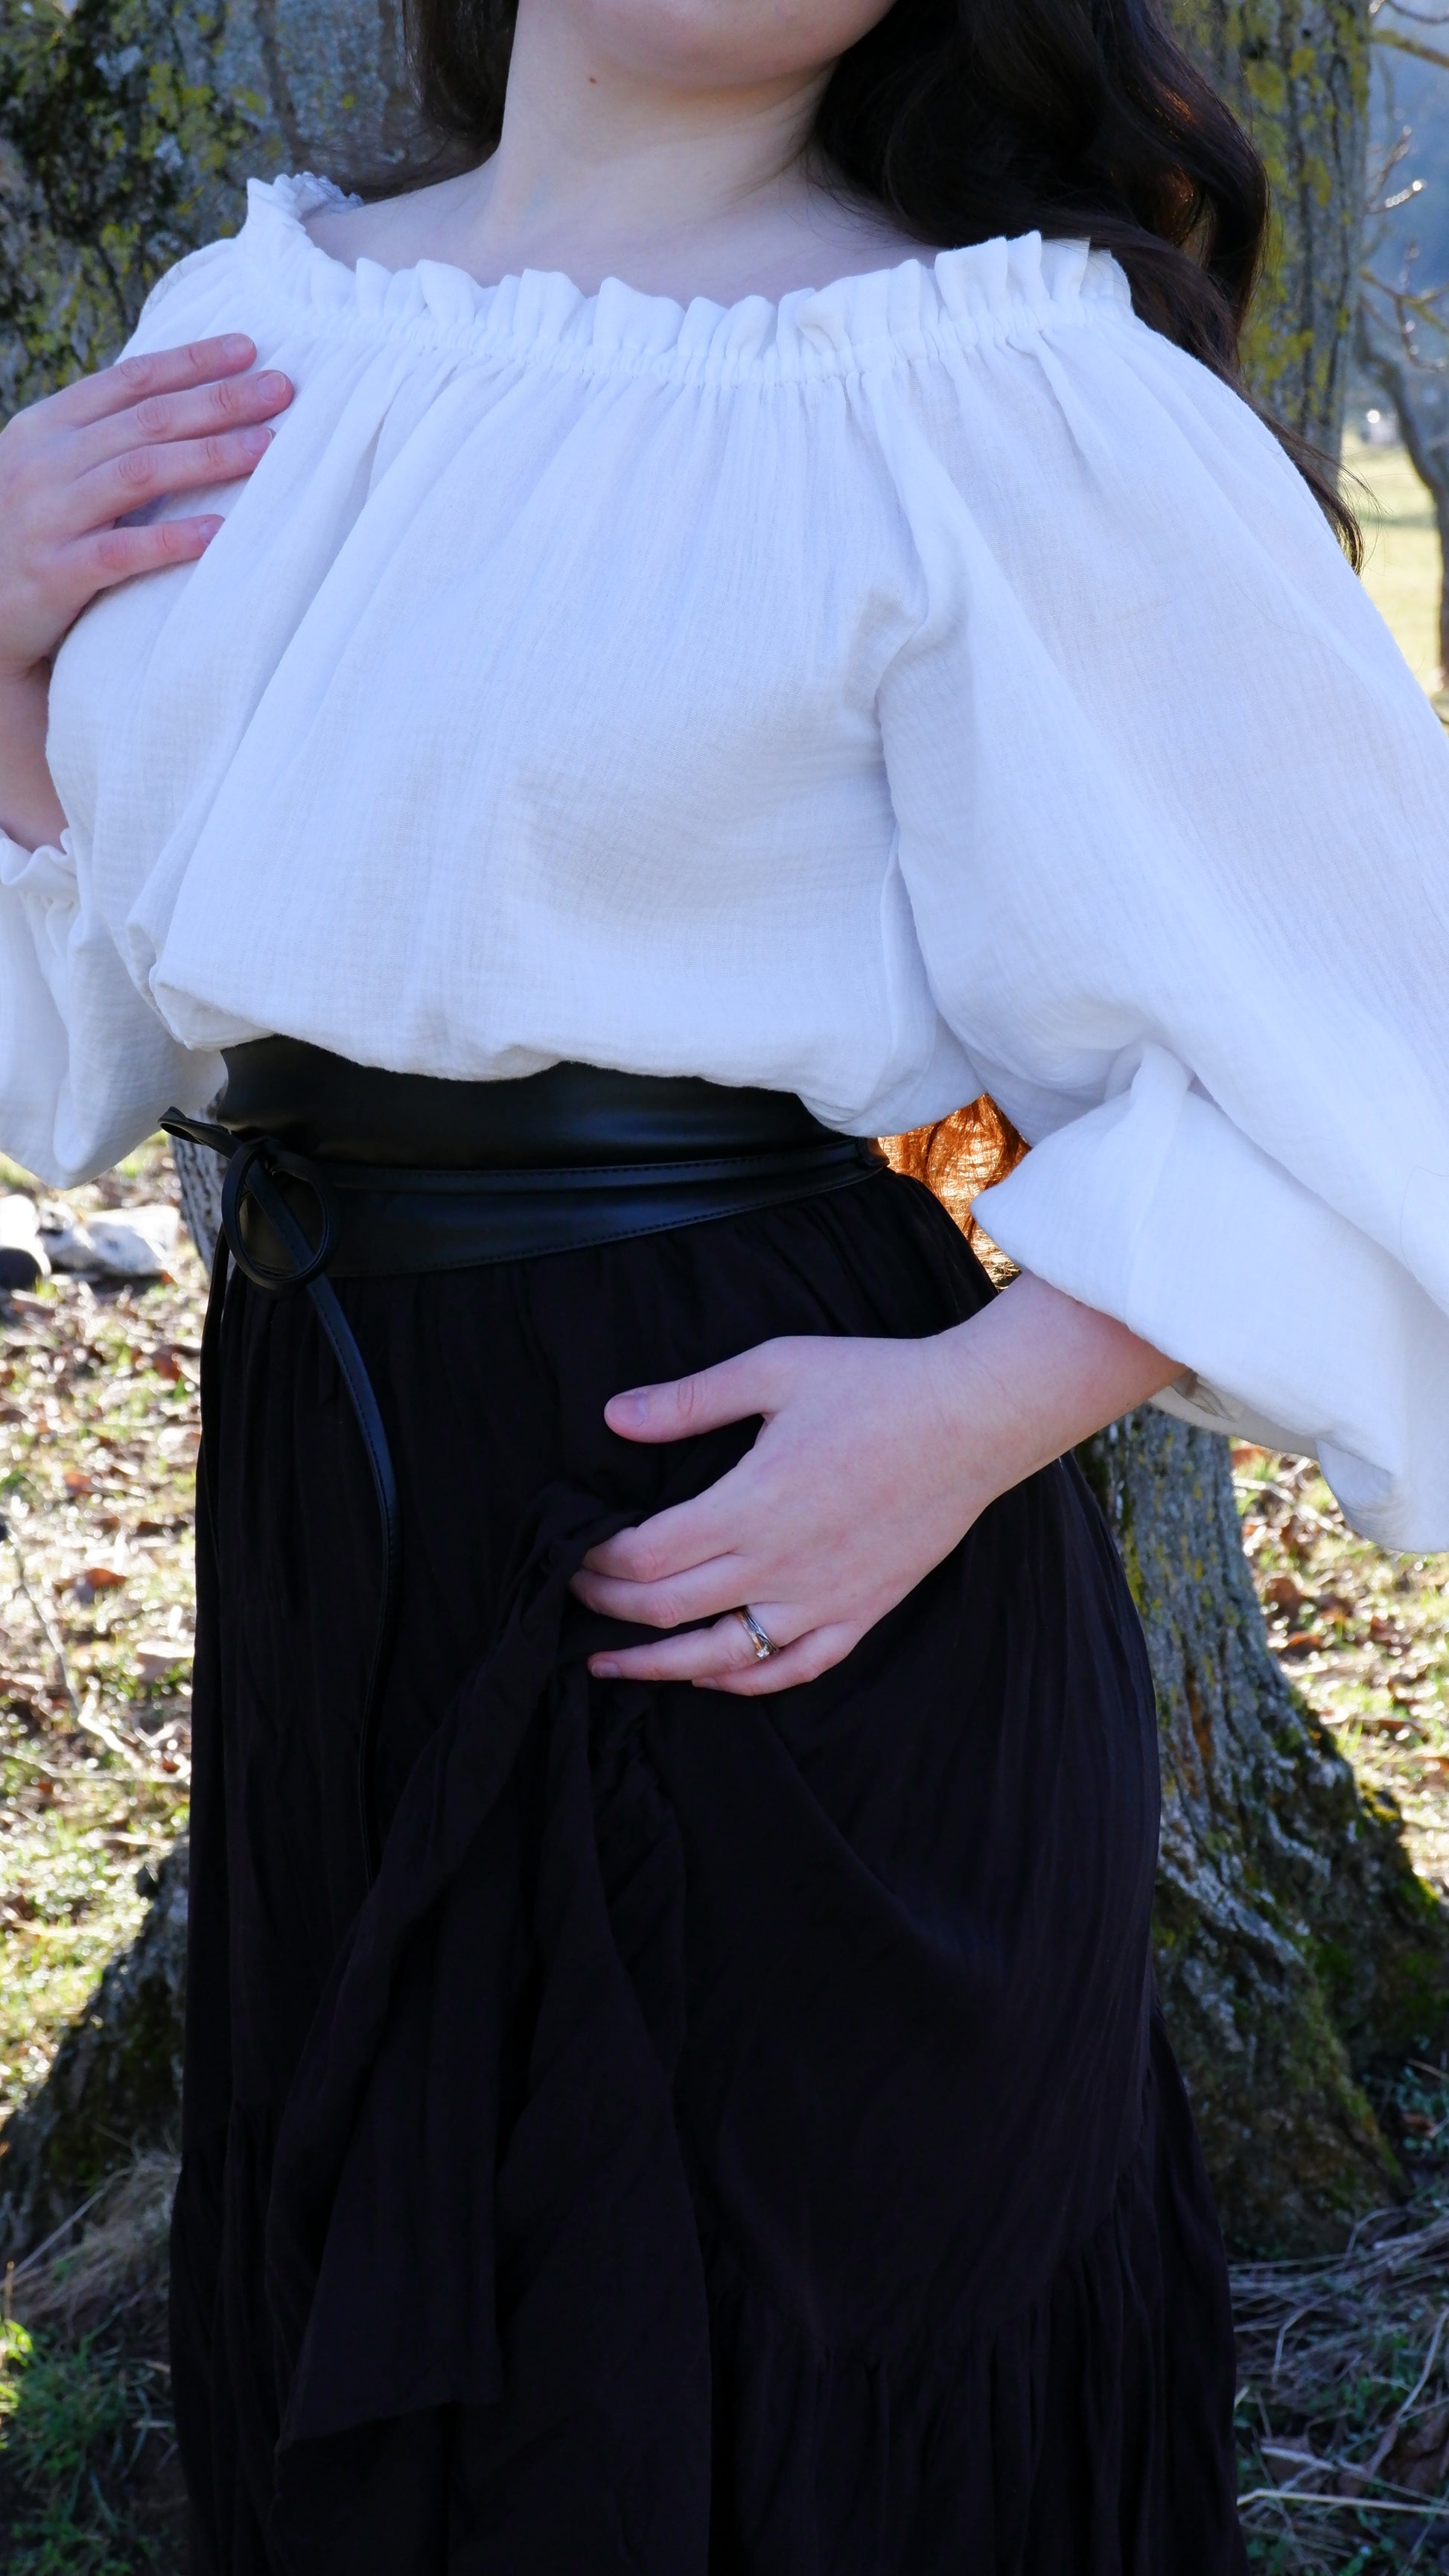 Renaissance style bodice corset – haizearranz